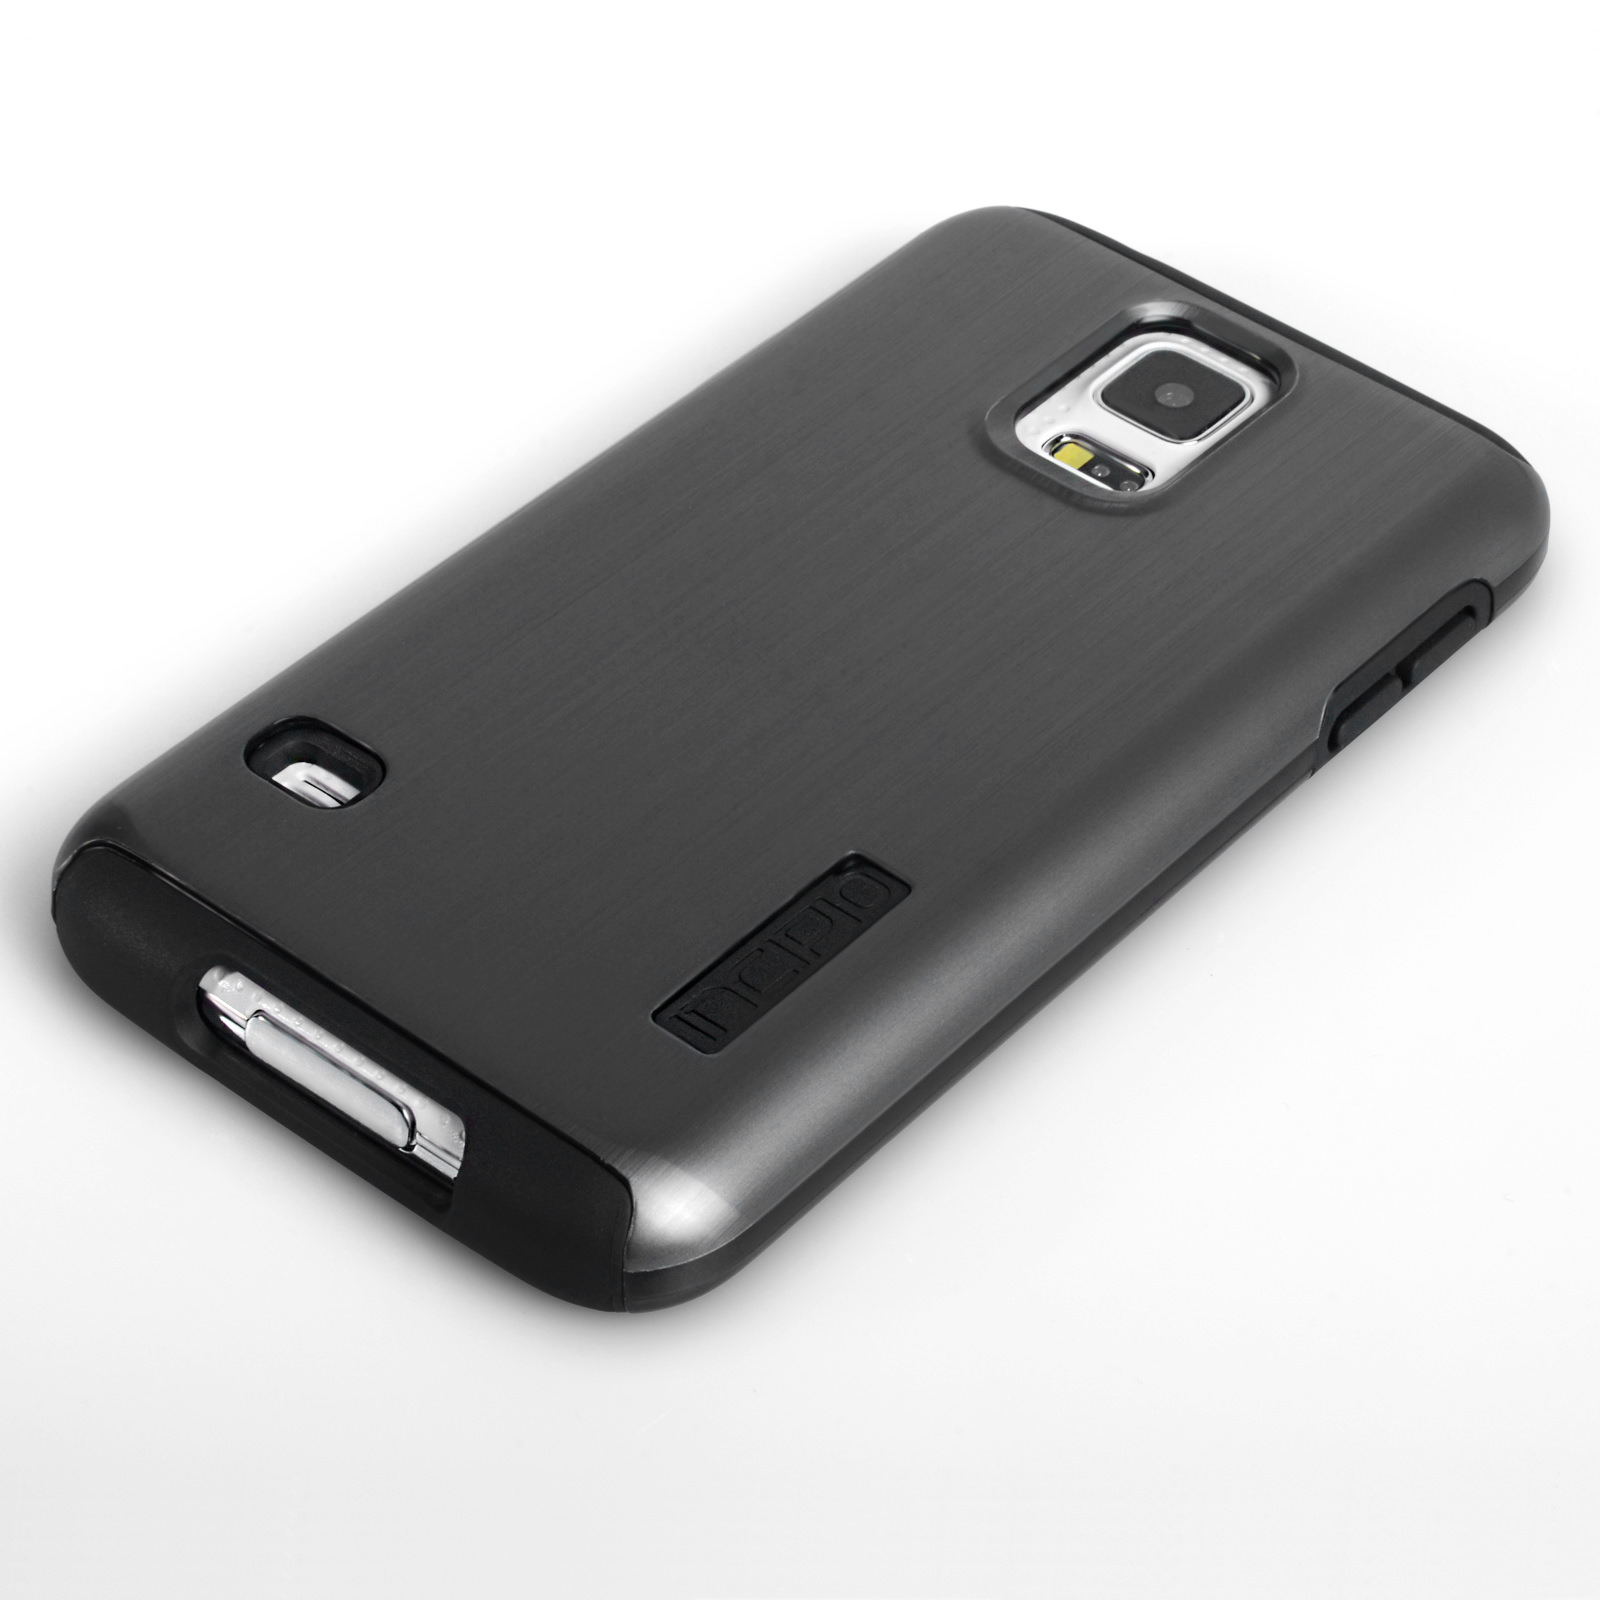 Incipio DualPro Shine for Samsung Galaxy S5 - Silver/Black